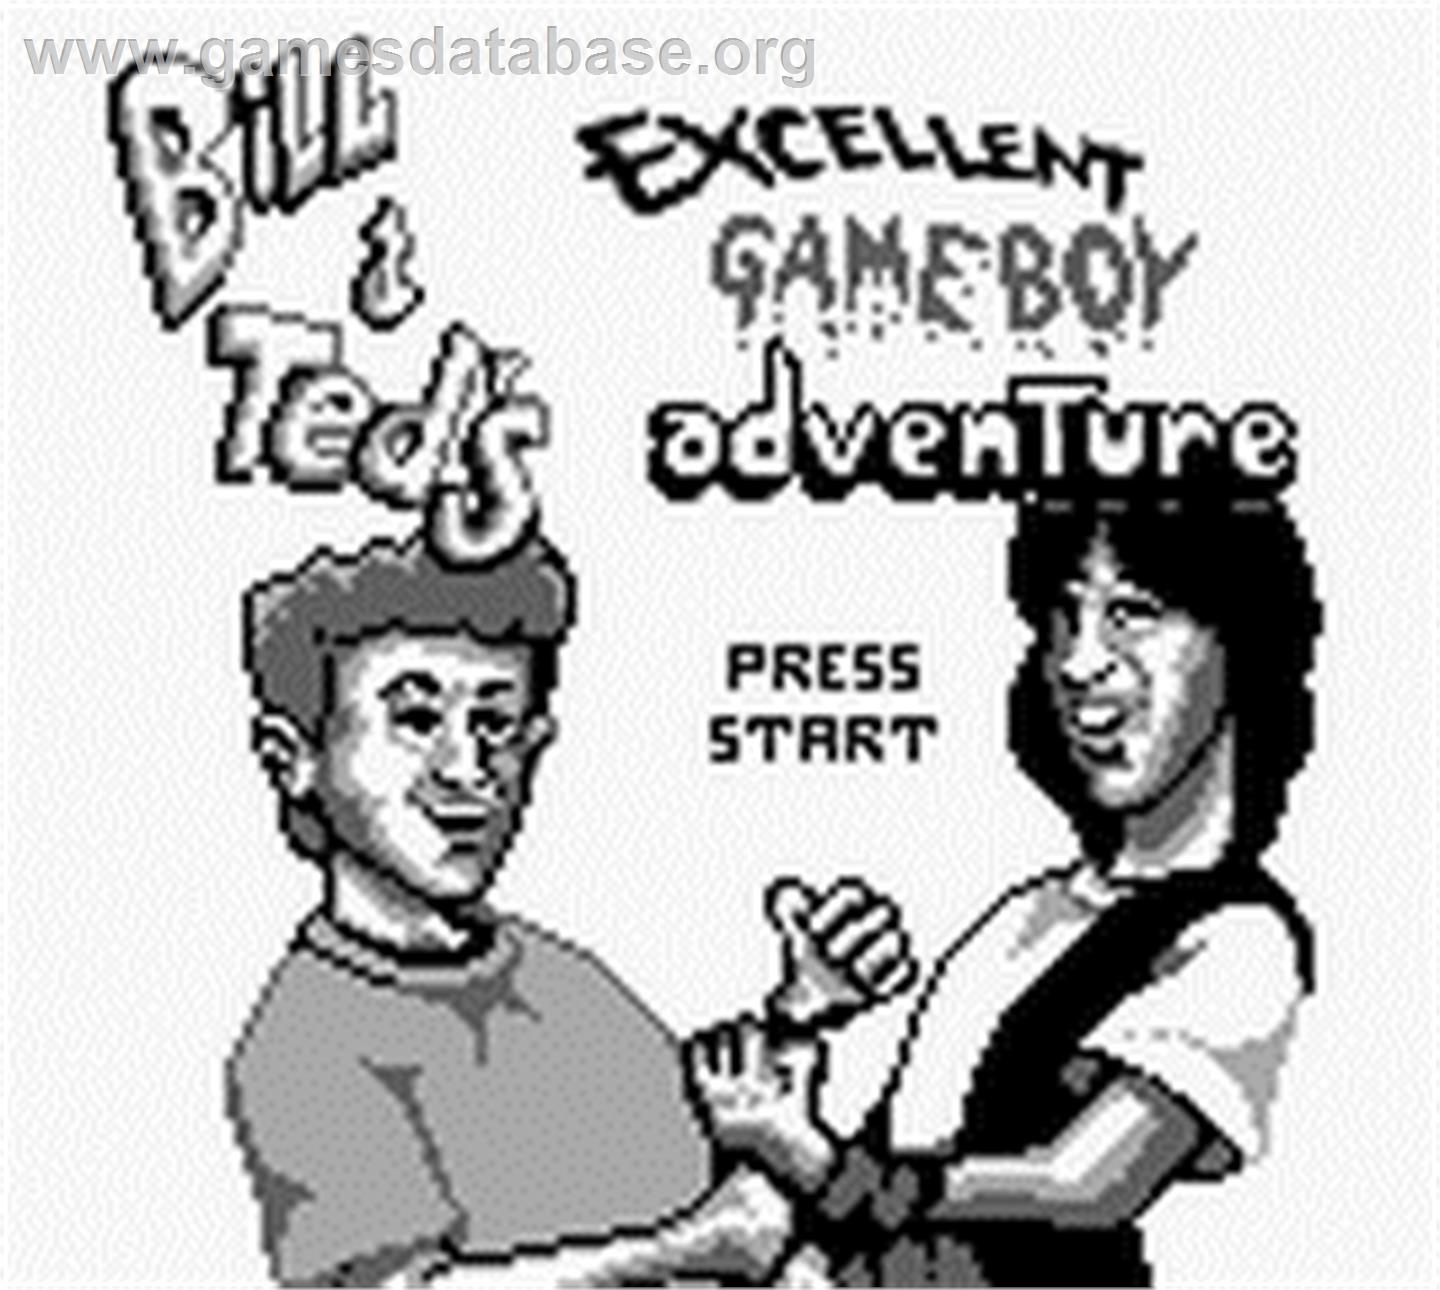 Bill & Ted's Excellent Game Boy Adventure - Nintendo Game Boy - Artwork - Title Screen